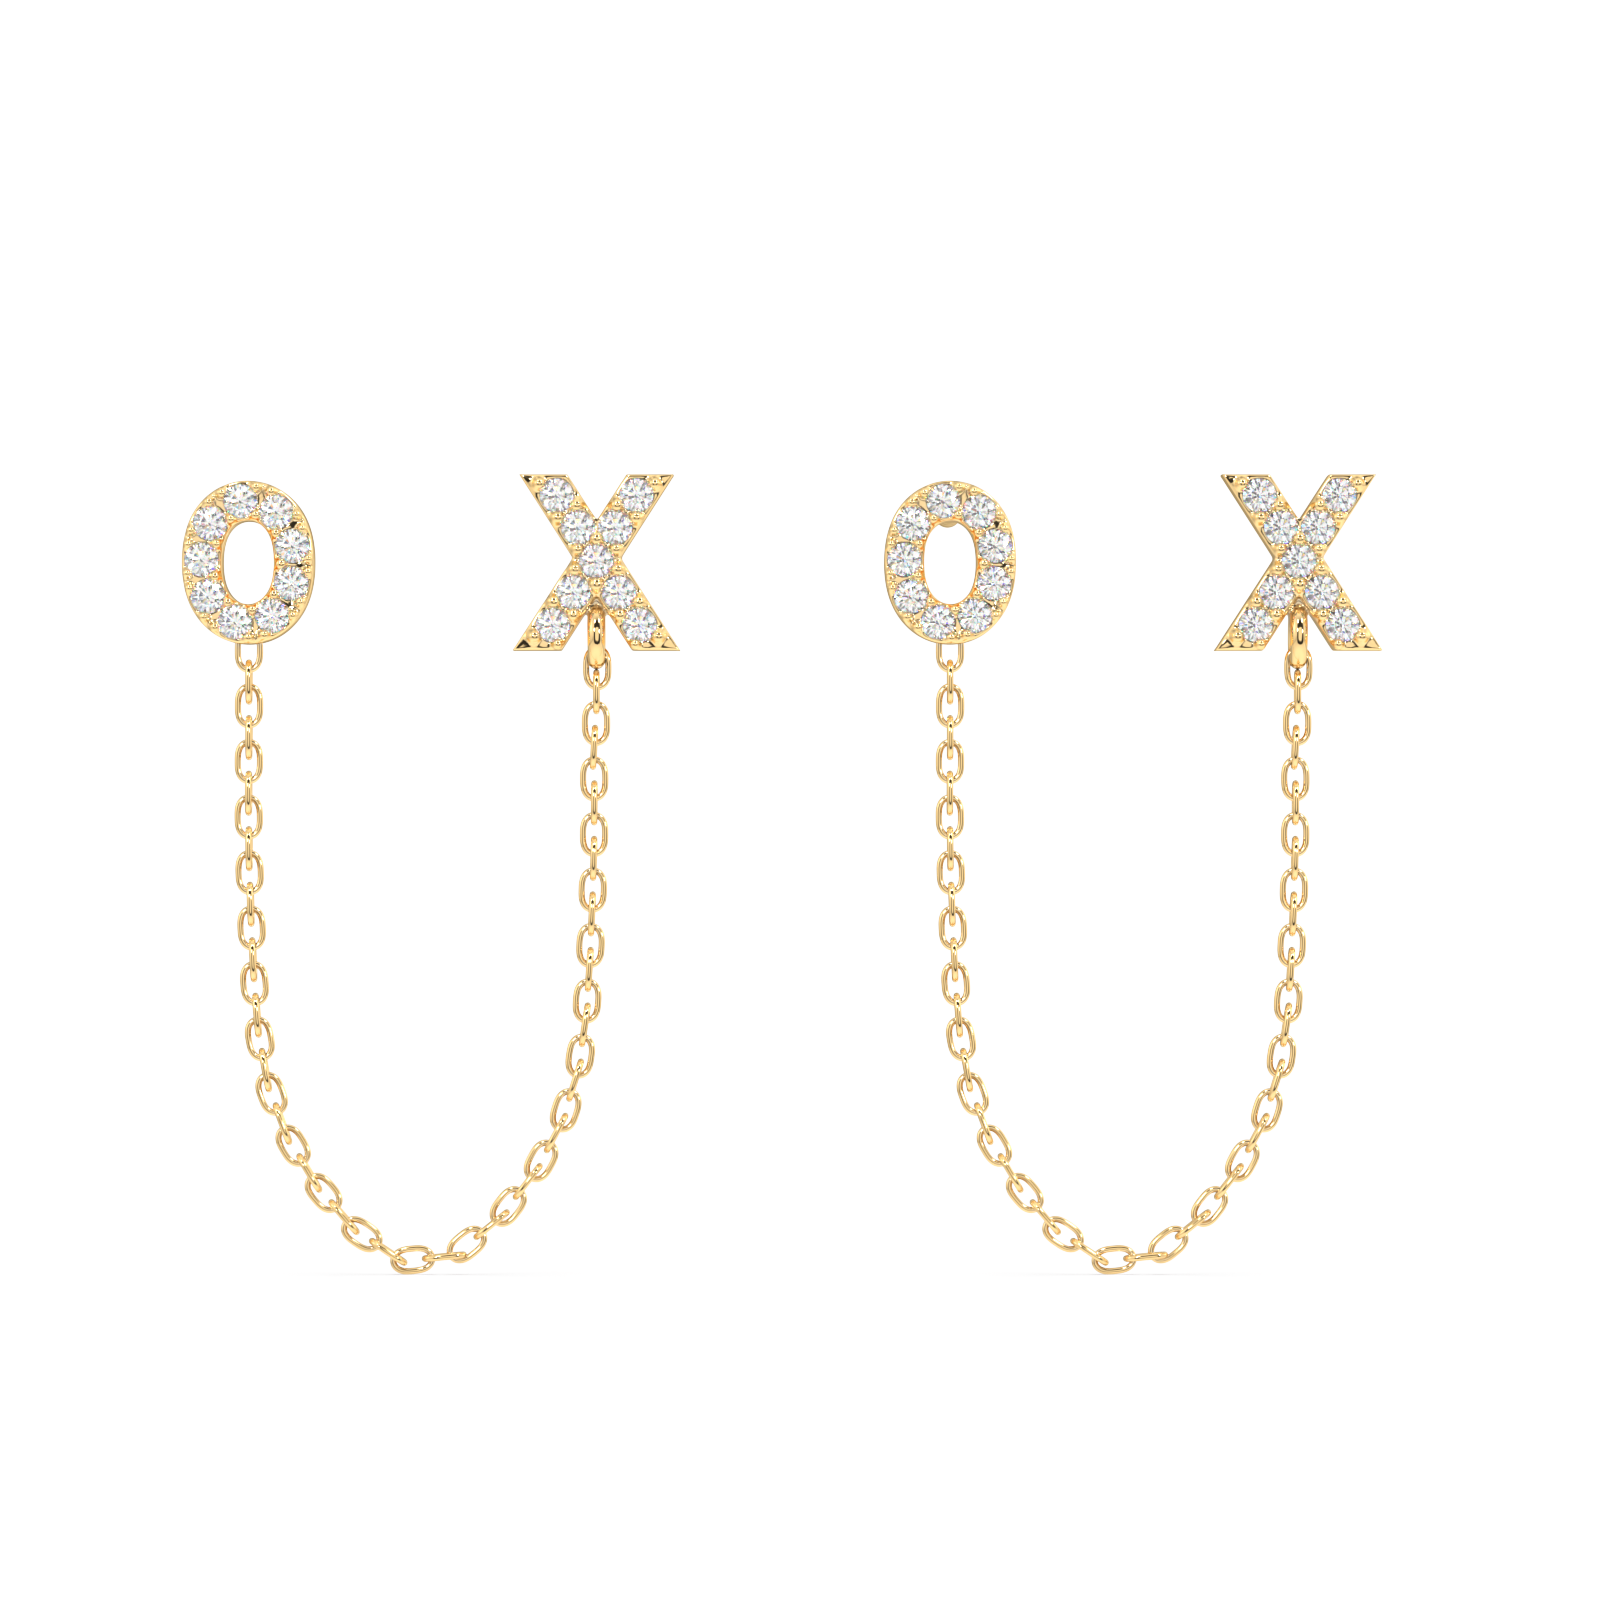 XO - 3 in 1 chain connector earring